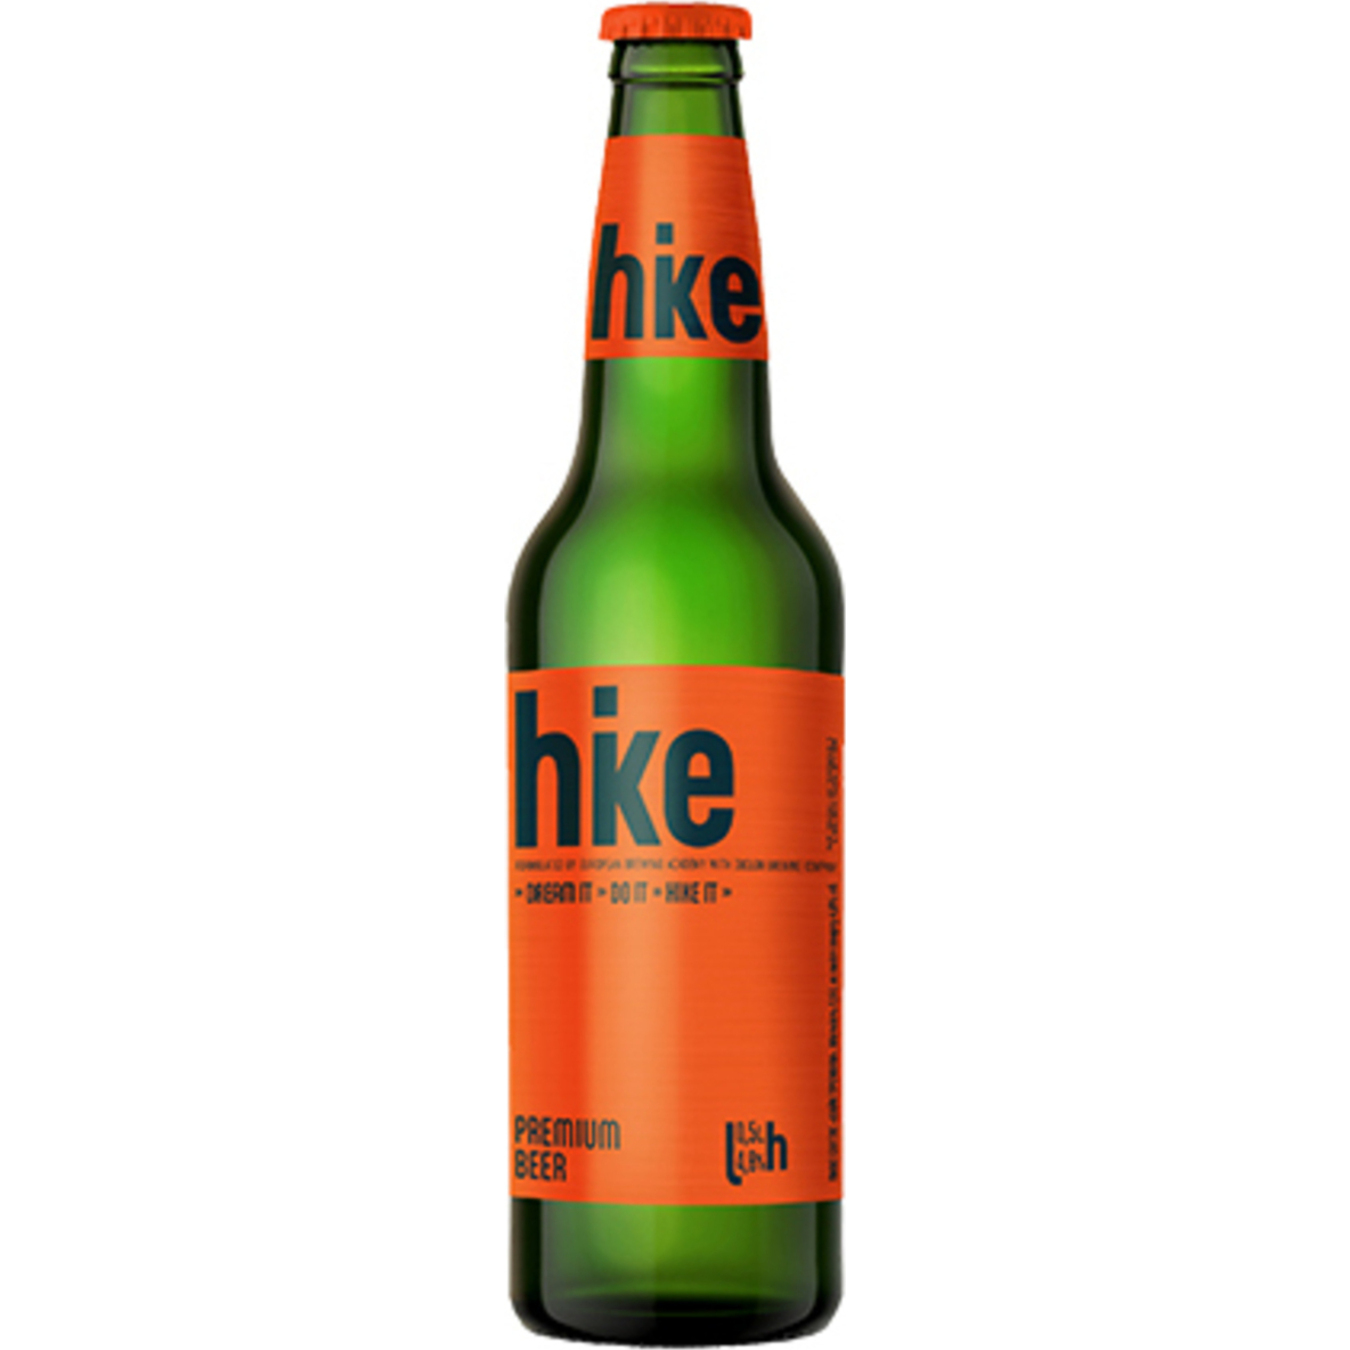 Hike Premium light beer 4,8% 0,5l